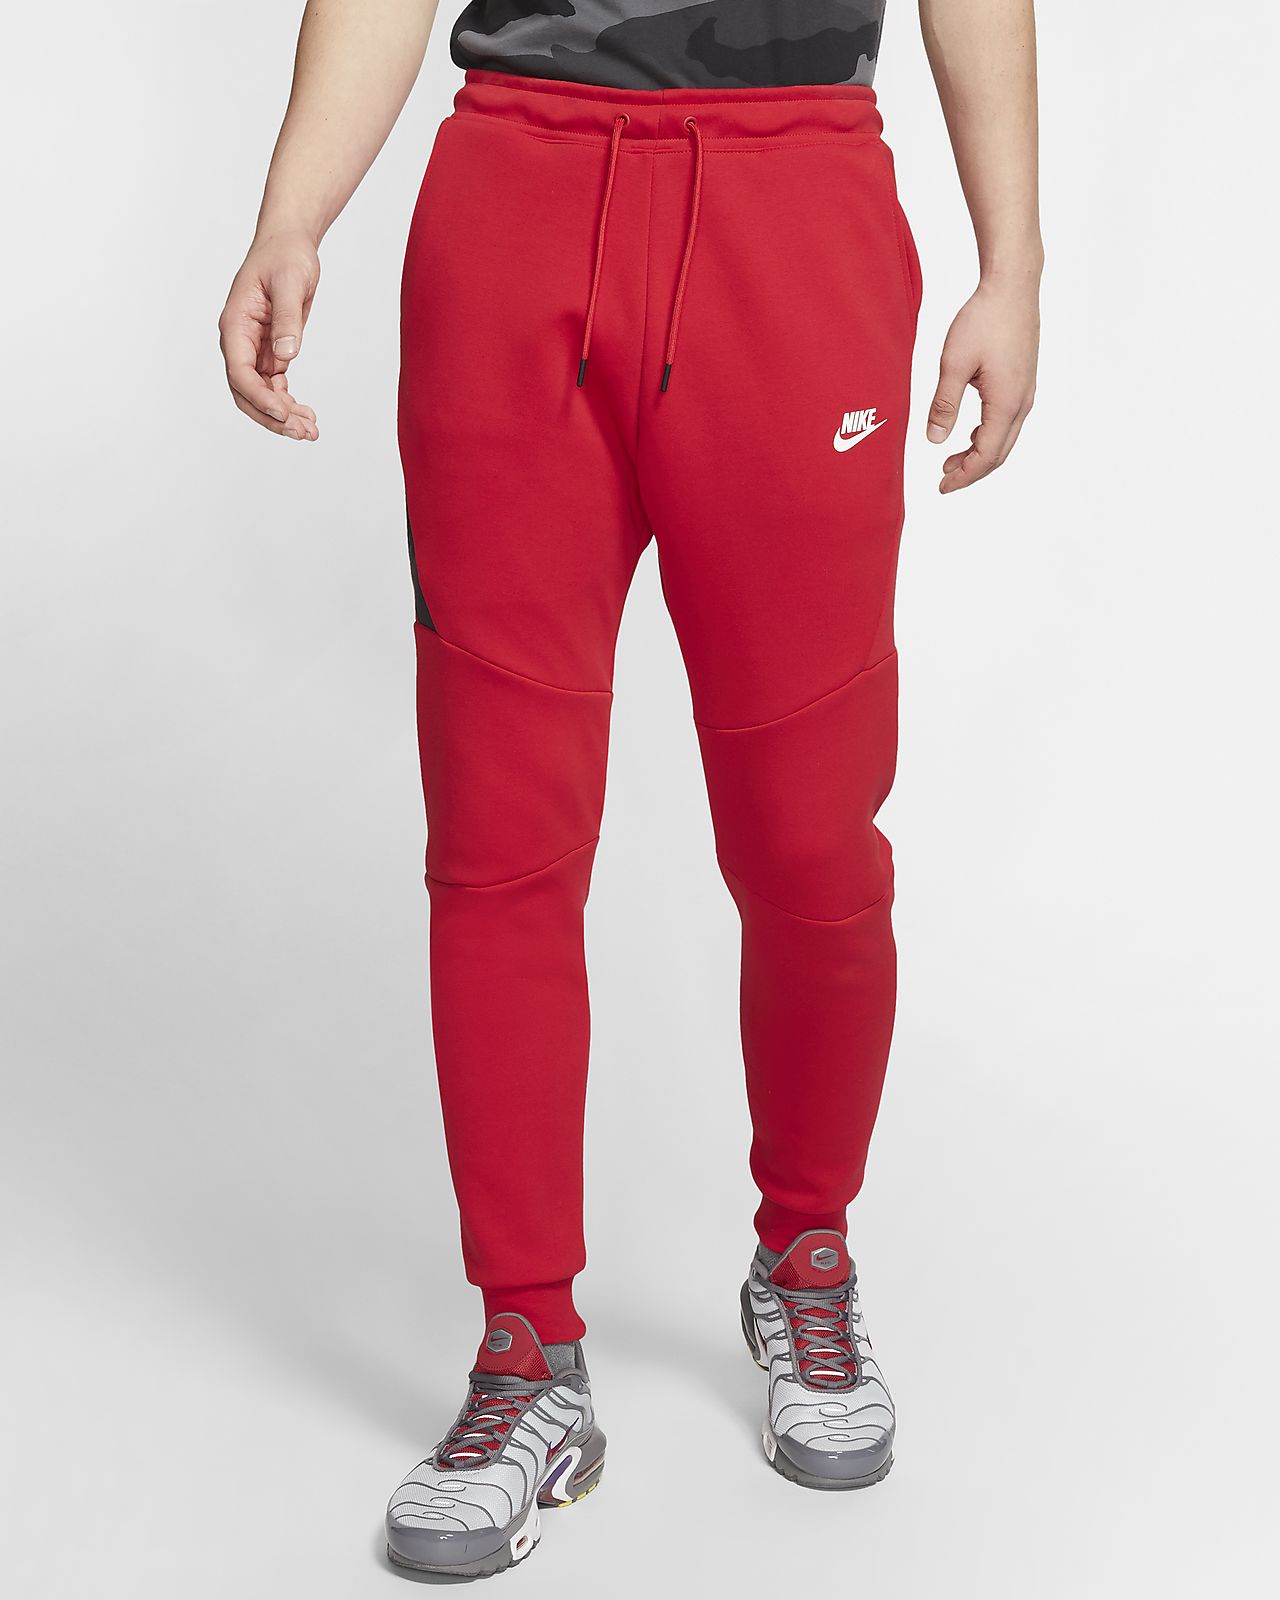 red nike jogging pants